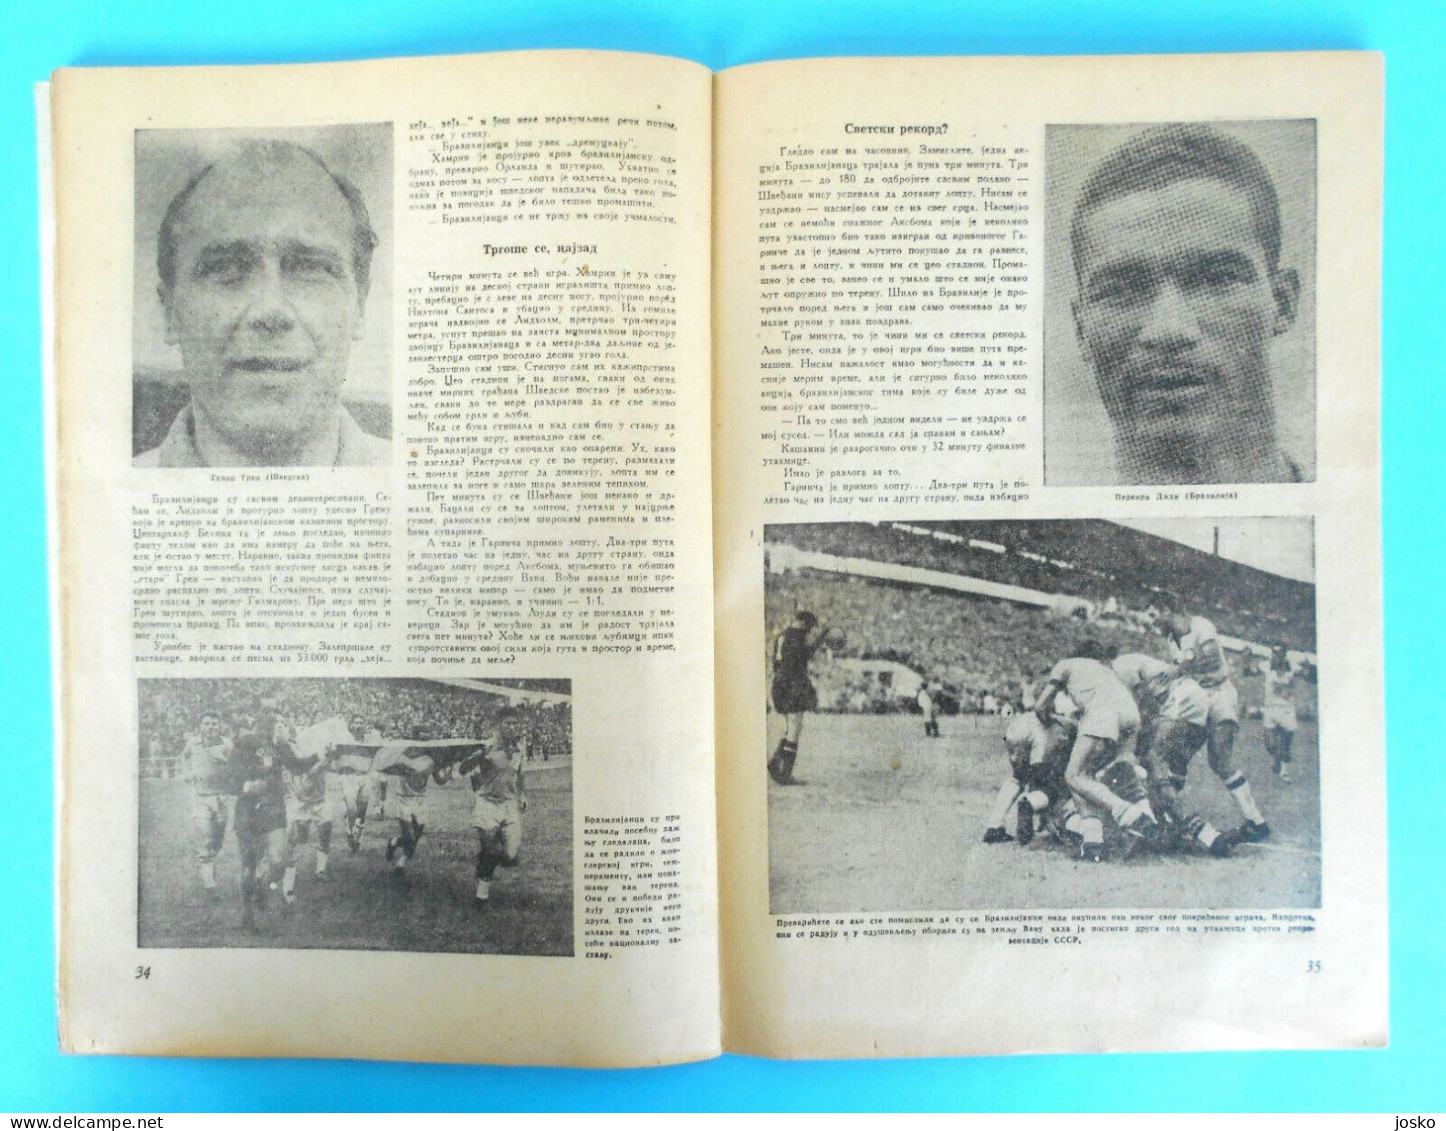 FIFA WORLD CUP 1958 - Yugoslav vintage football programme * England Scotland Northern Ireland Wales Germany Mexico PELE